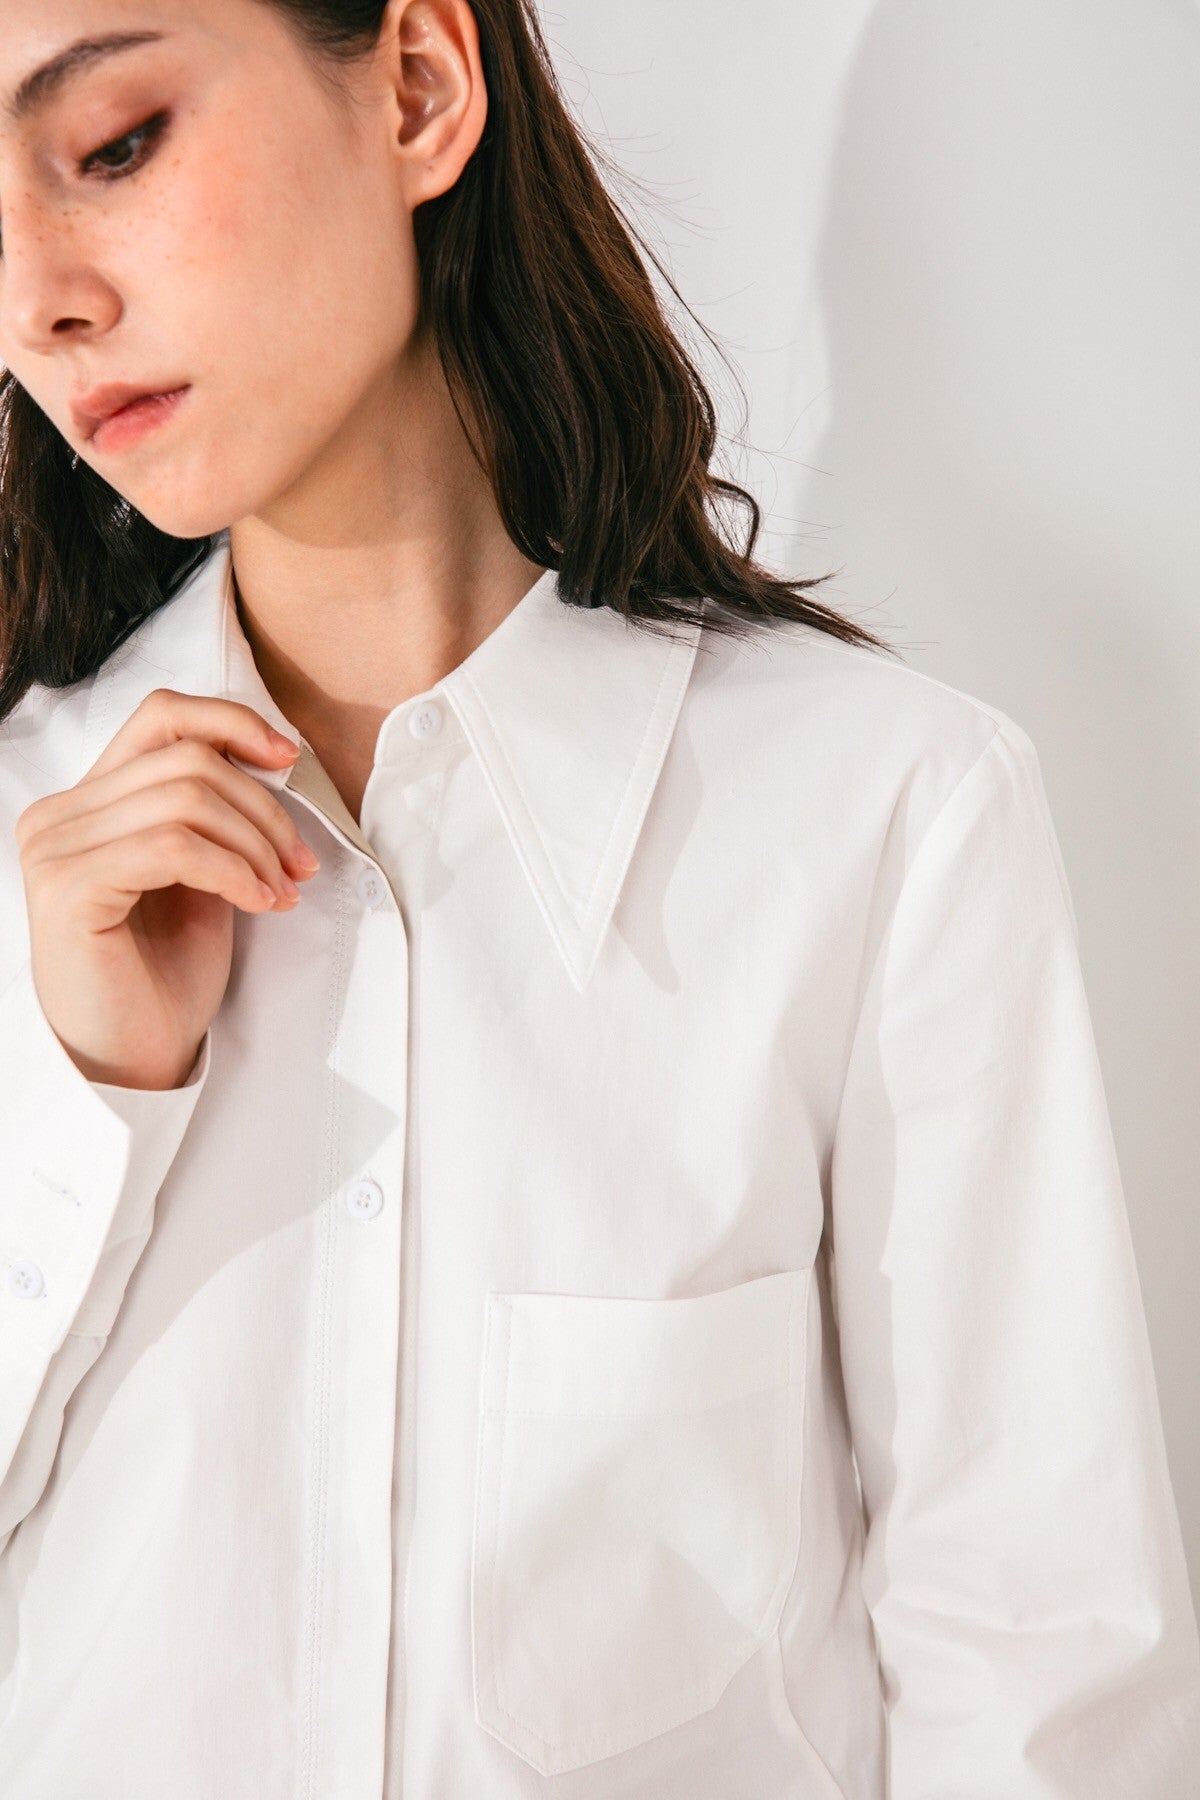 SKYE San Francisco SF shop ethical modern minimalist quality women clothing fashion Audrey Shirt white 5